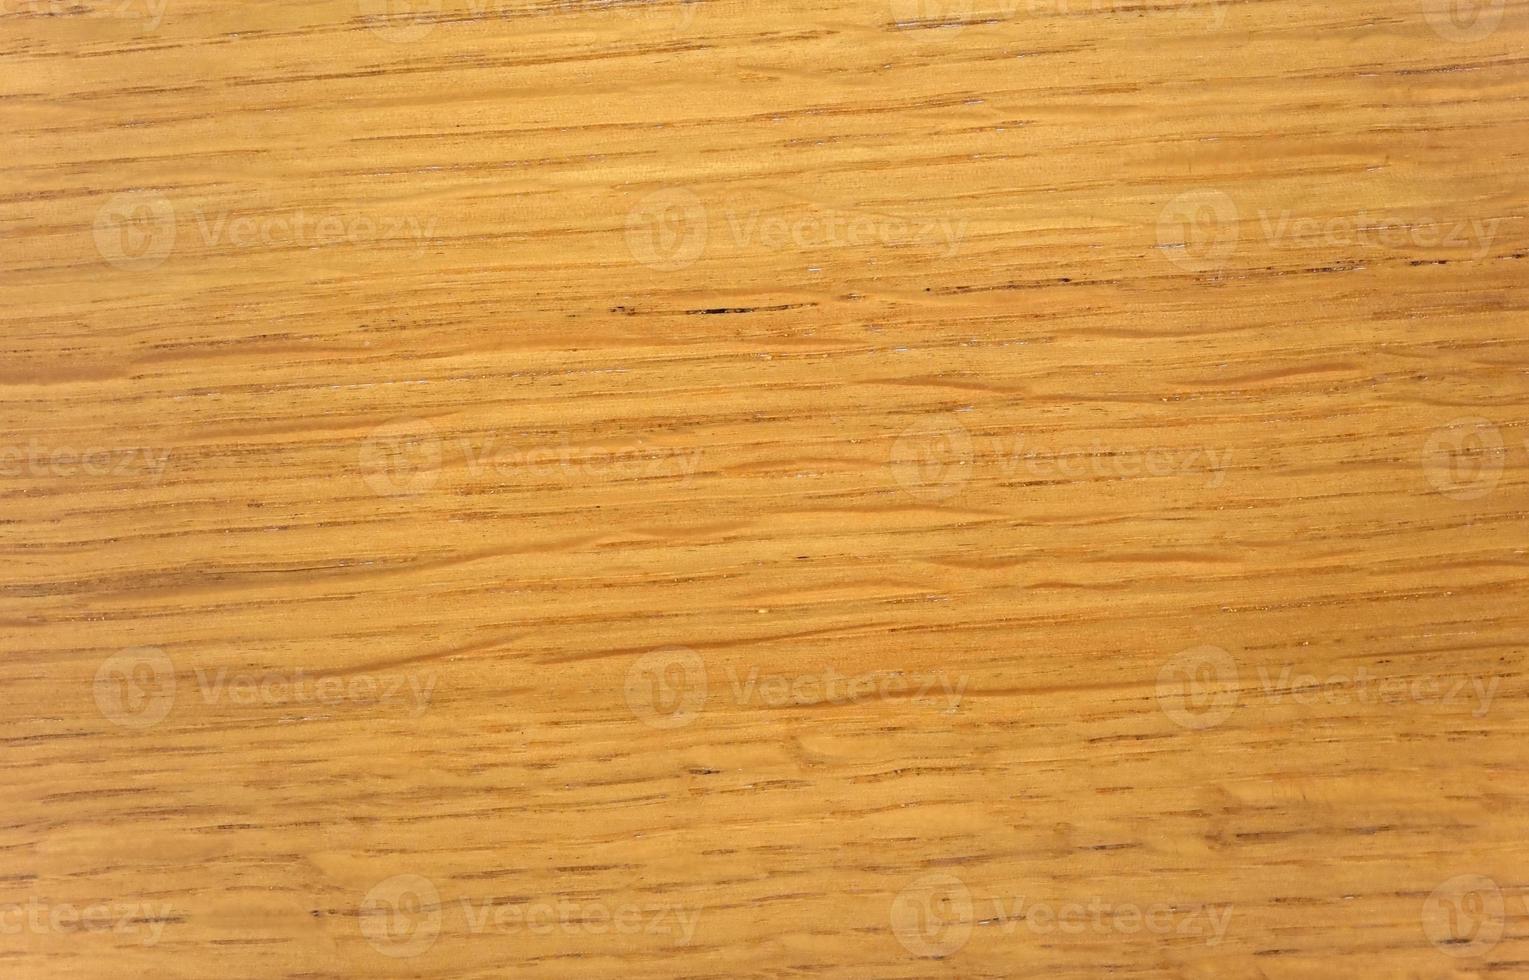 ljusbrunt trä textur bakgrund foto